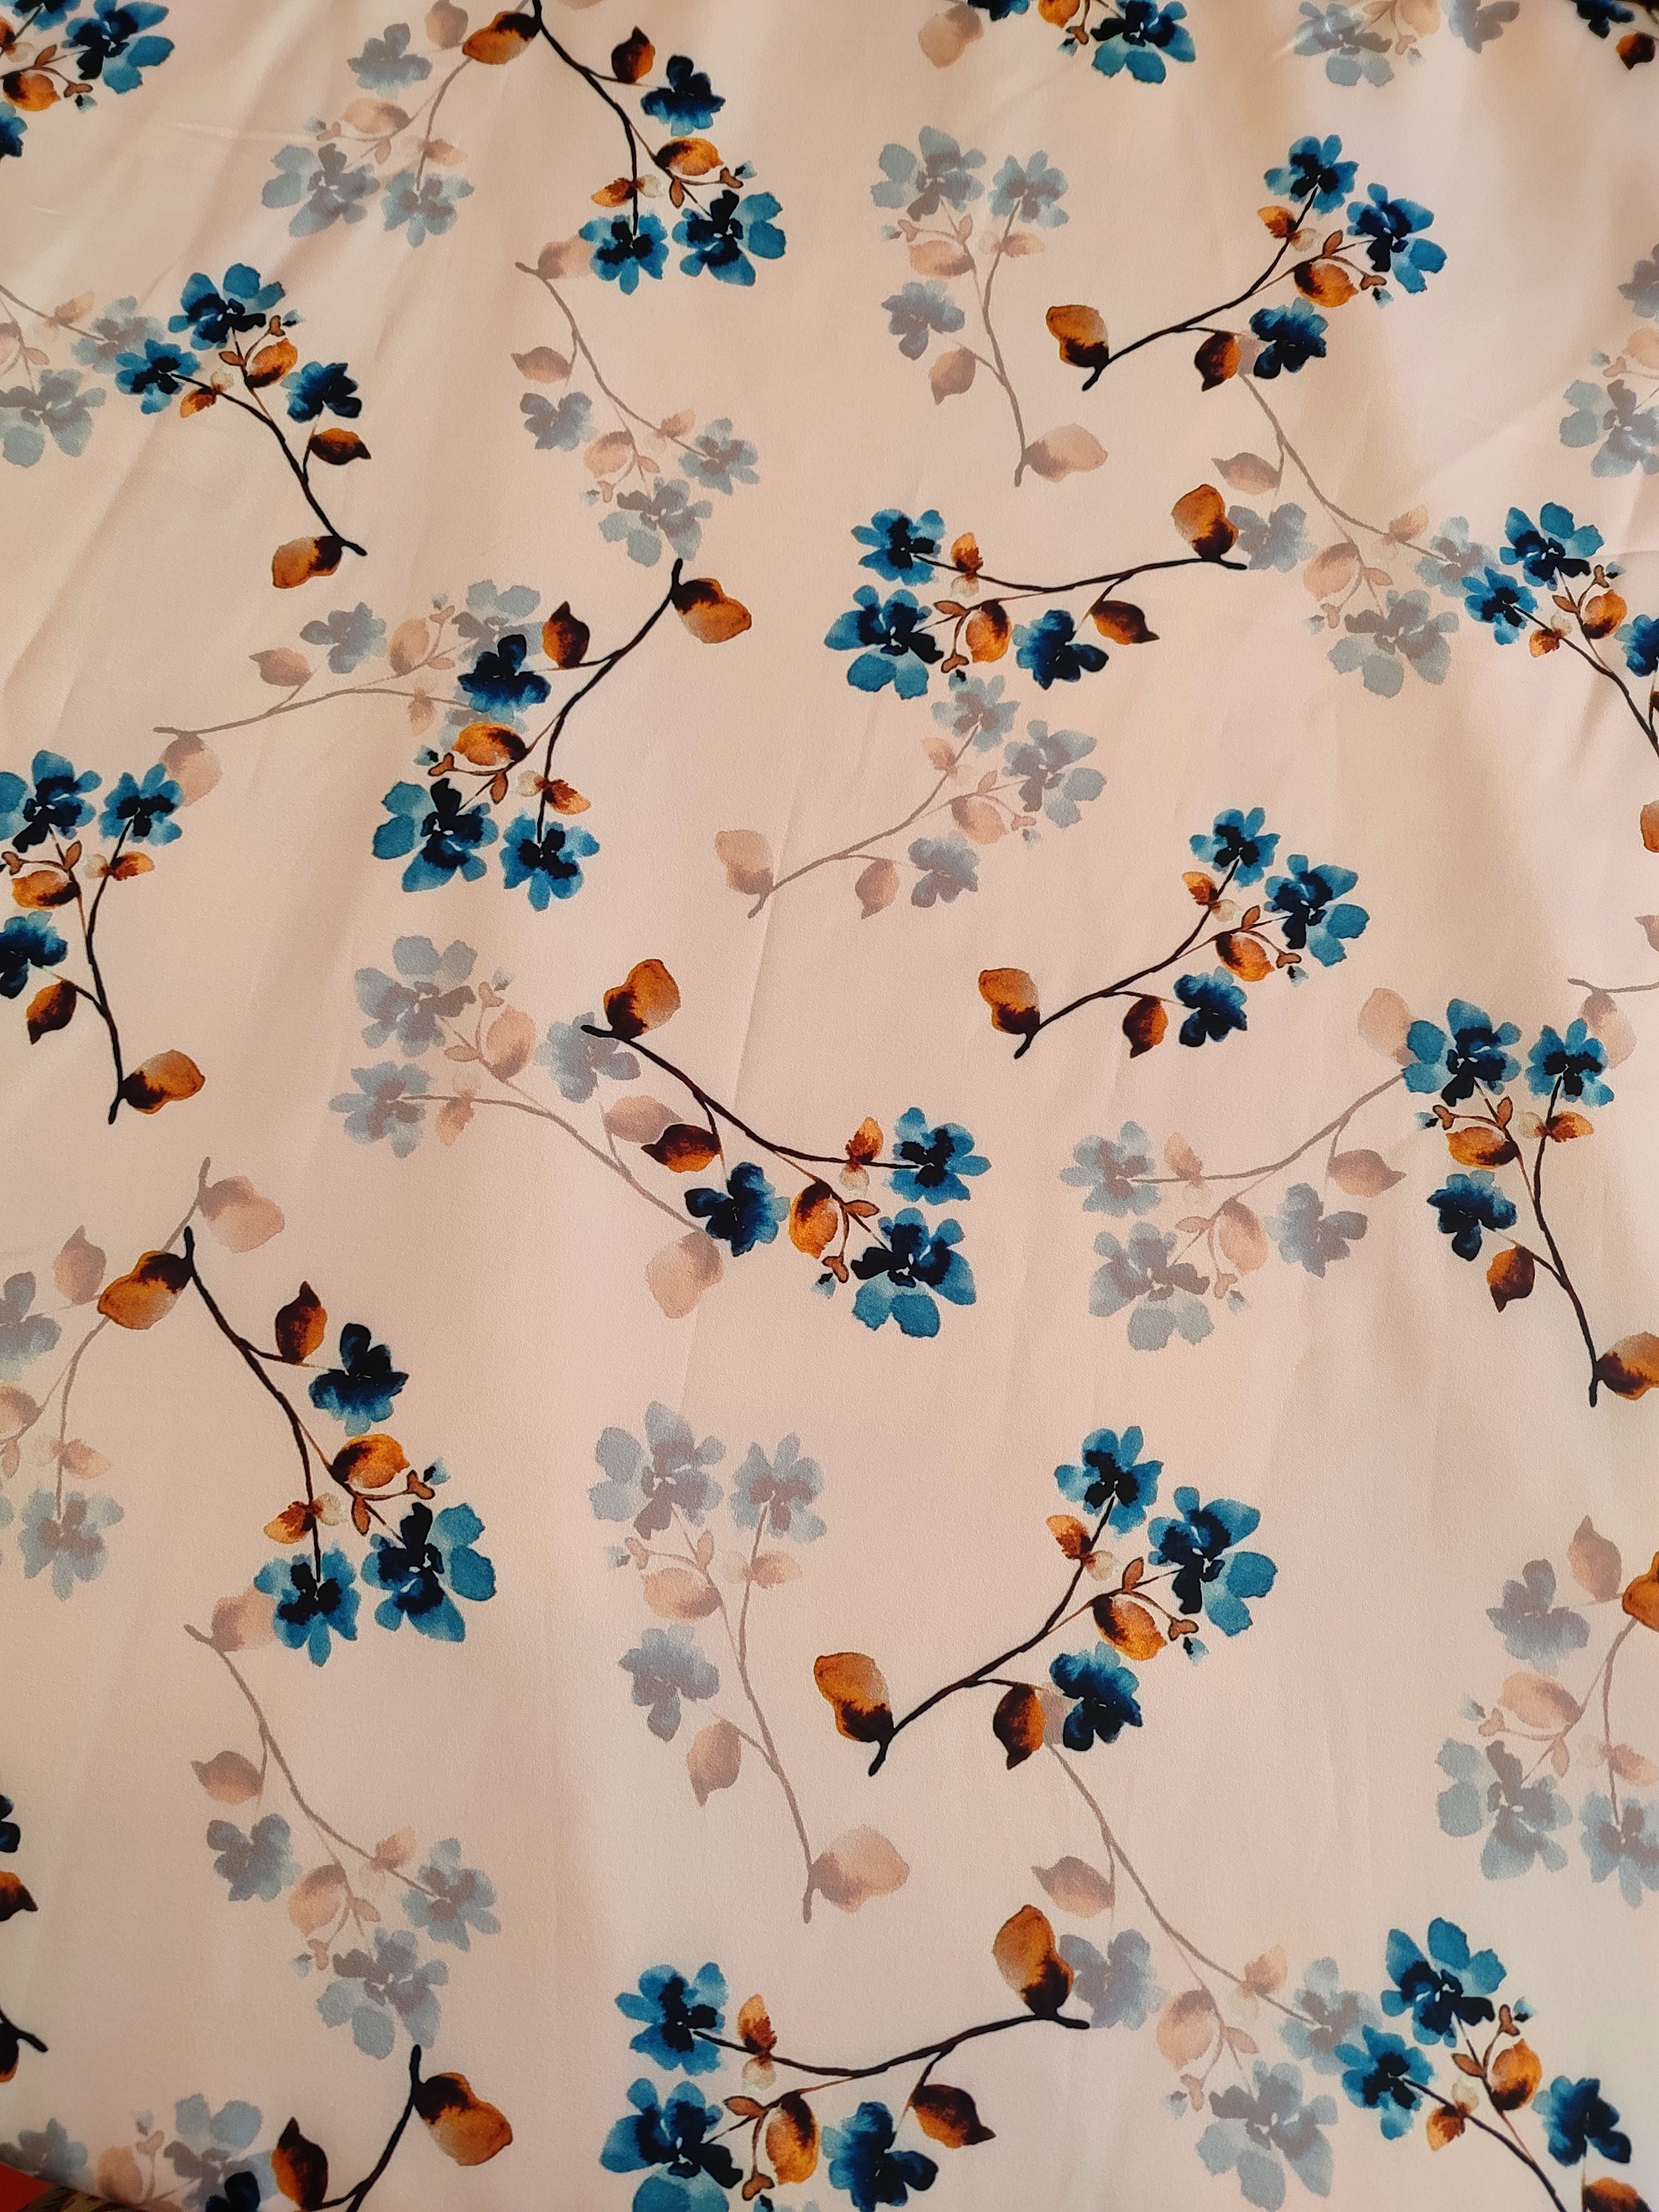 Floral Digital Printed Modal Satin Fabric. Fabric 